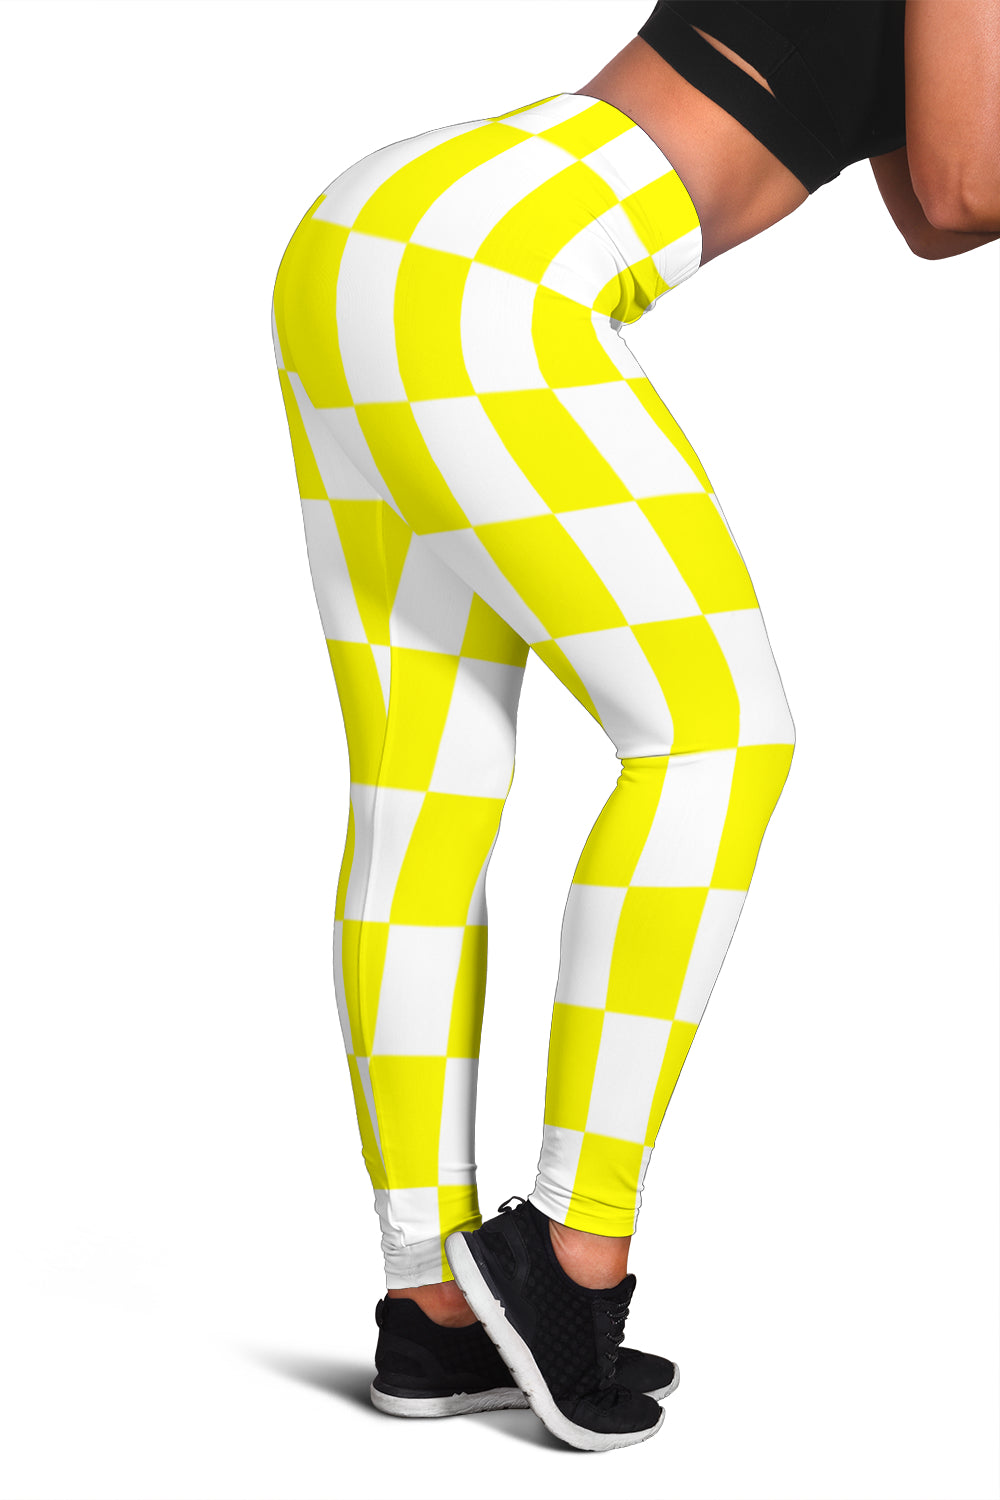 Racing Yellow Checkered Leggings